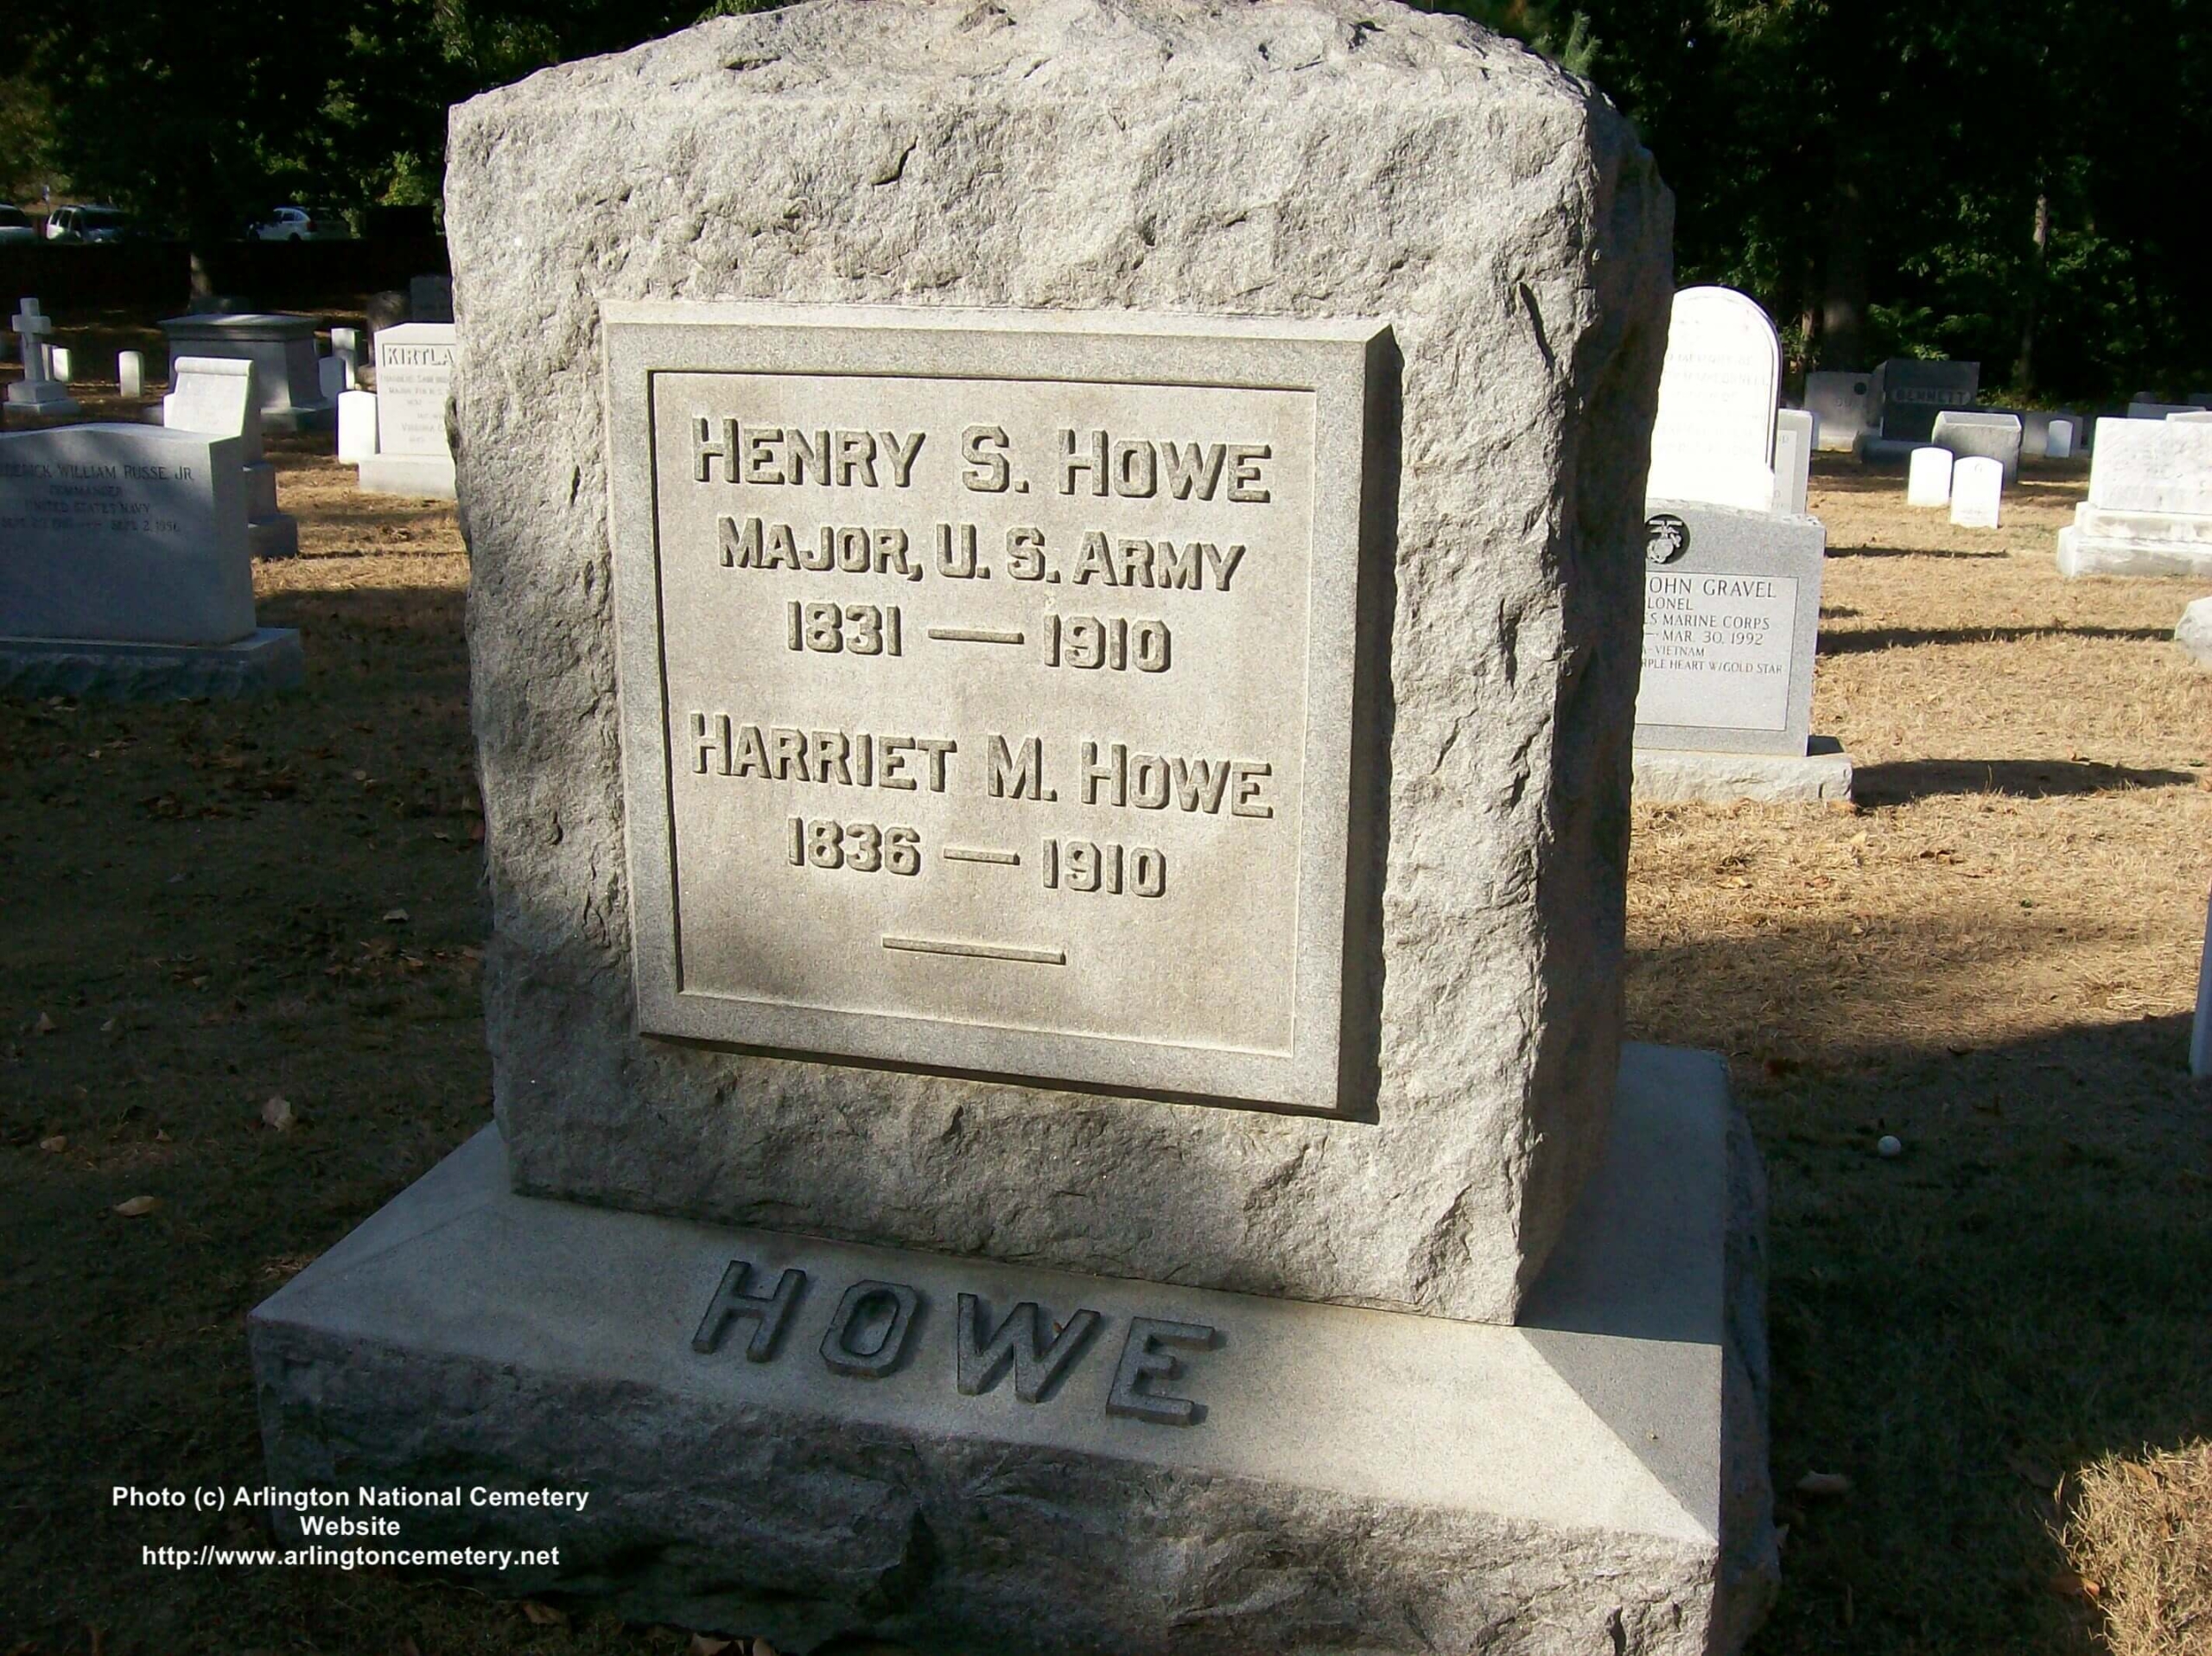 hshowe-gravesite-photo-october-2007-001